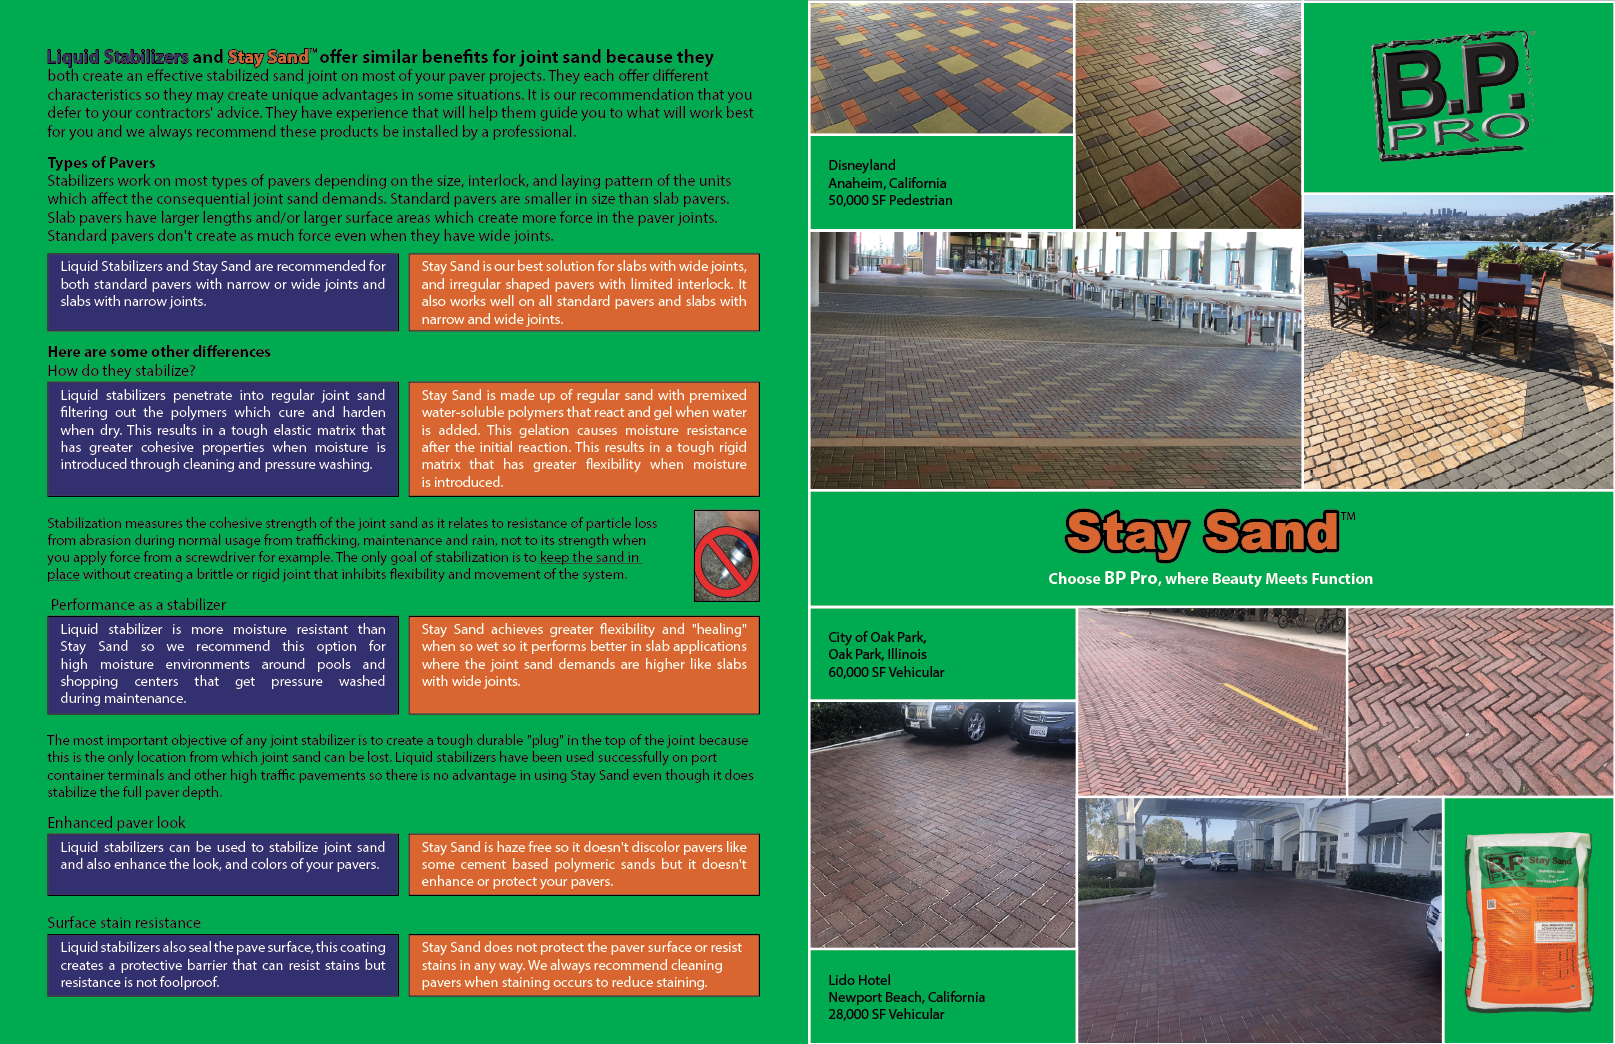 BP PRo Stay Sand Brochure - Outside